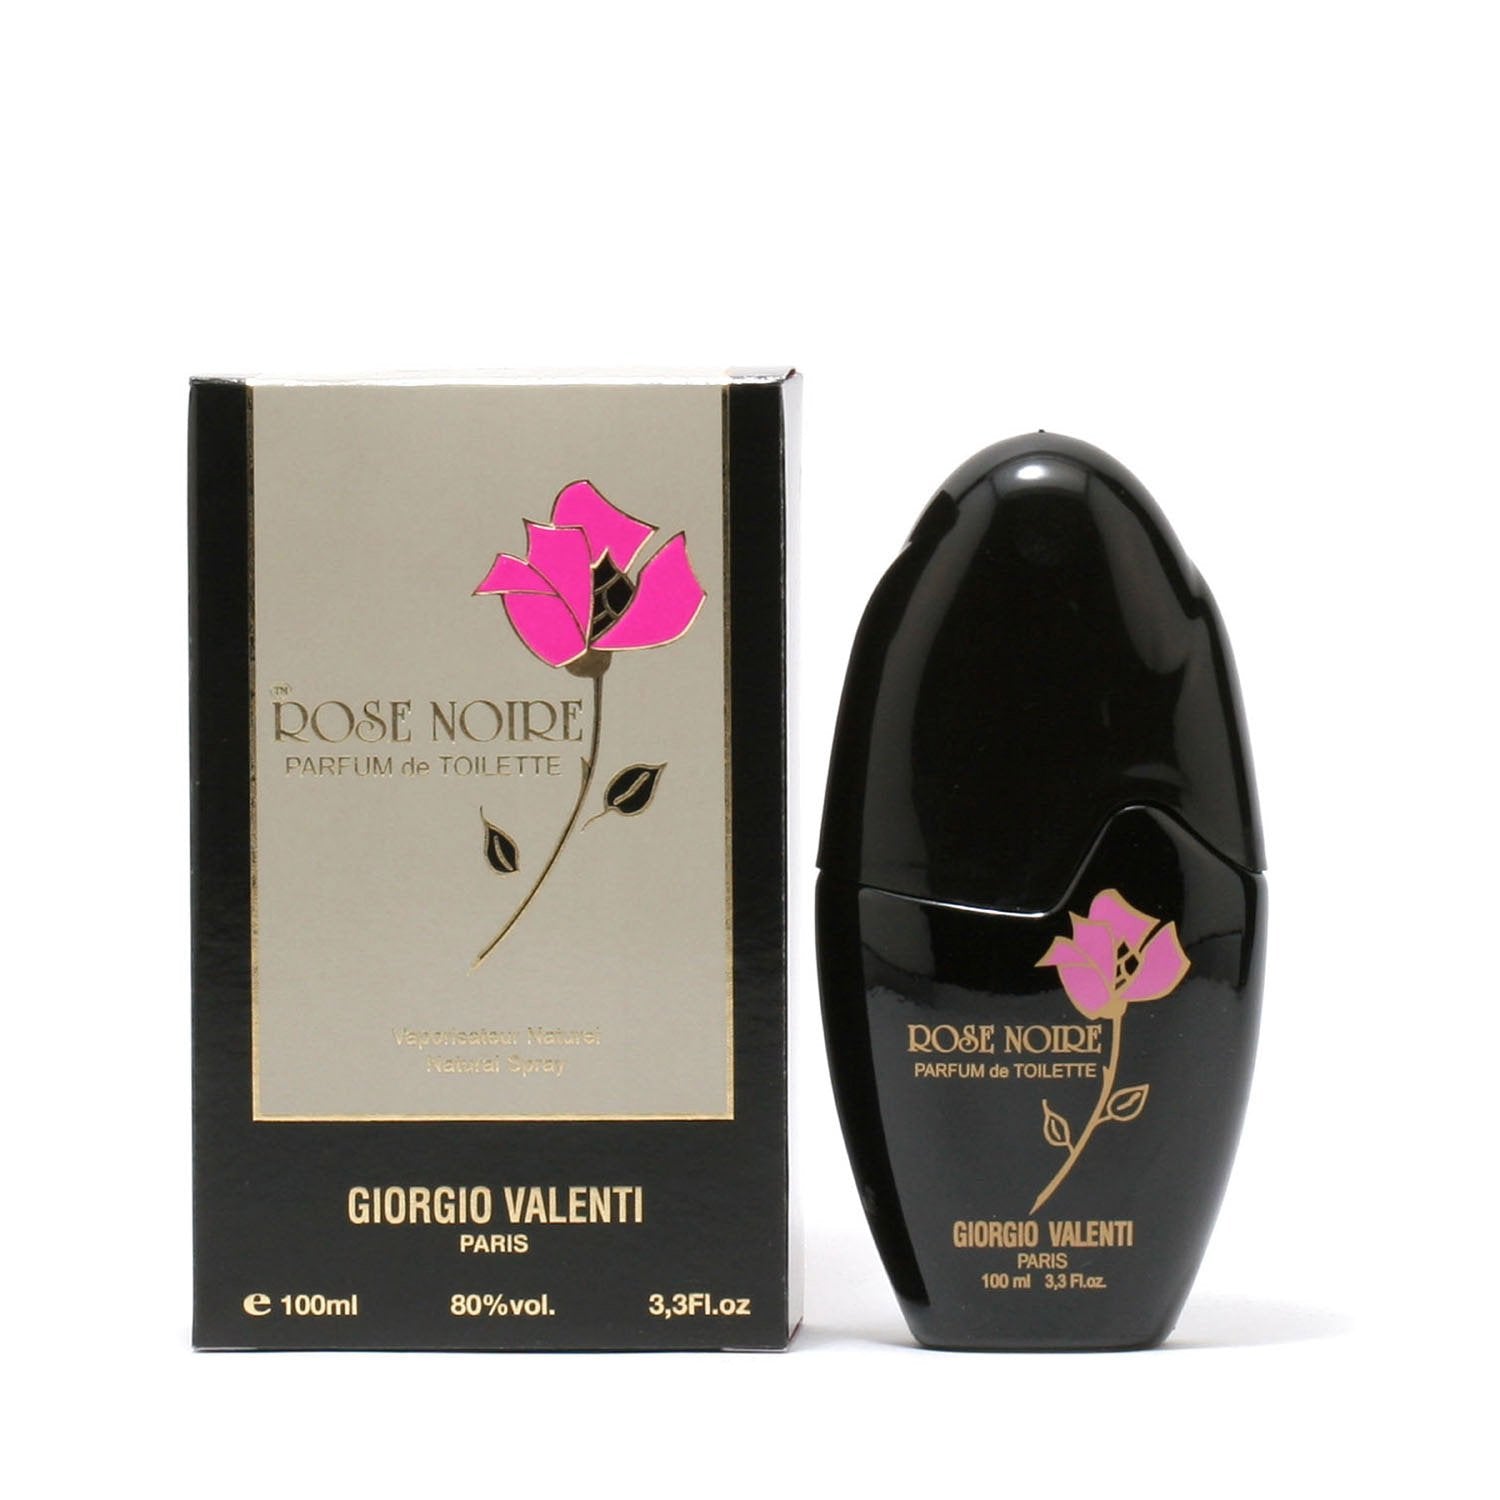 Perfume - ROSE NOIR FOR WOMEN BY GIORGIO VALENTI - PARFUM DE TOILETTE SPRAY, 3.3 OZ